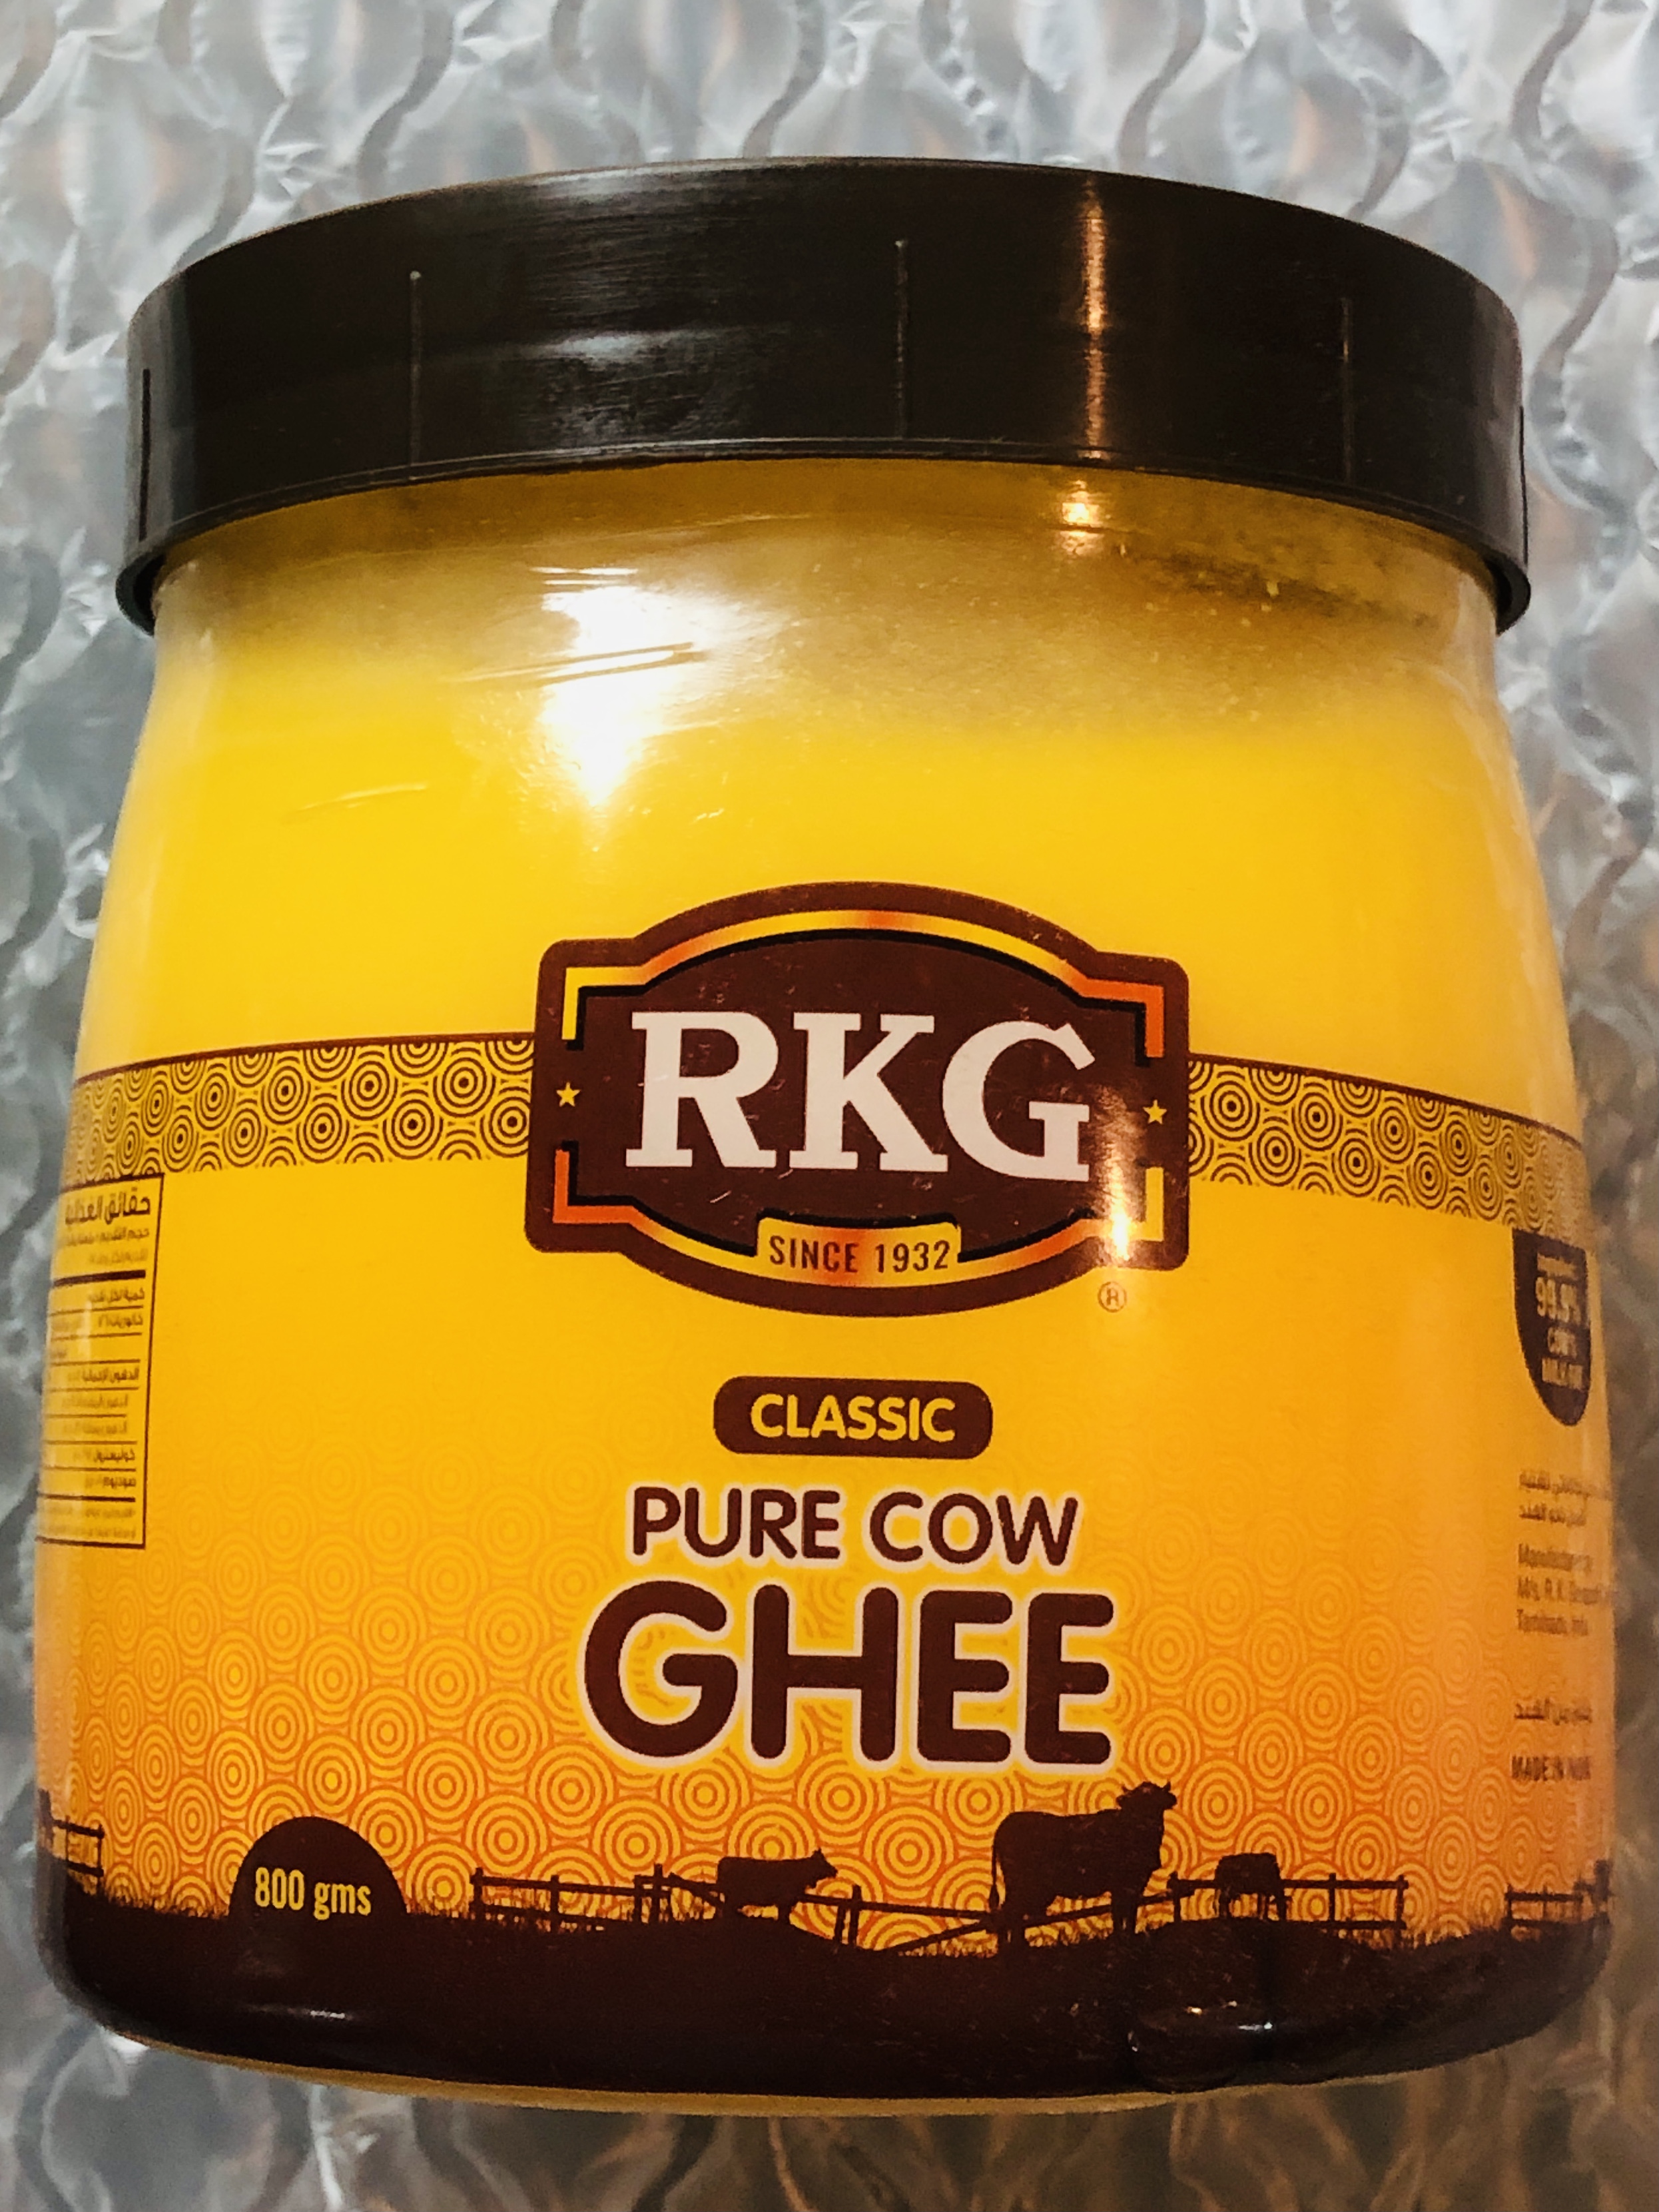 RKG PURE COW GHEE 800g เนยกีใสคีโต นมวัว 100% จากอินเดีย (Clarified Butter) ??.